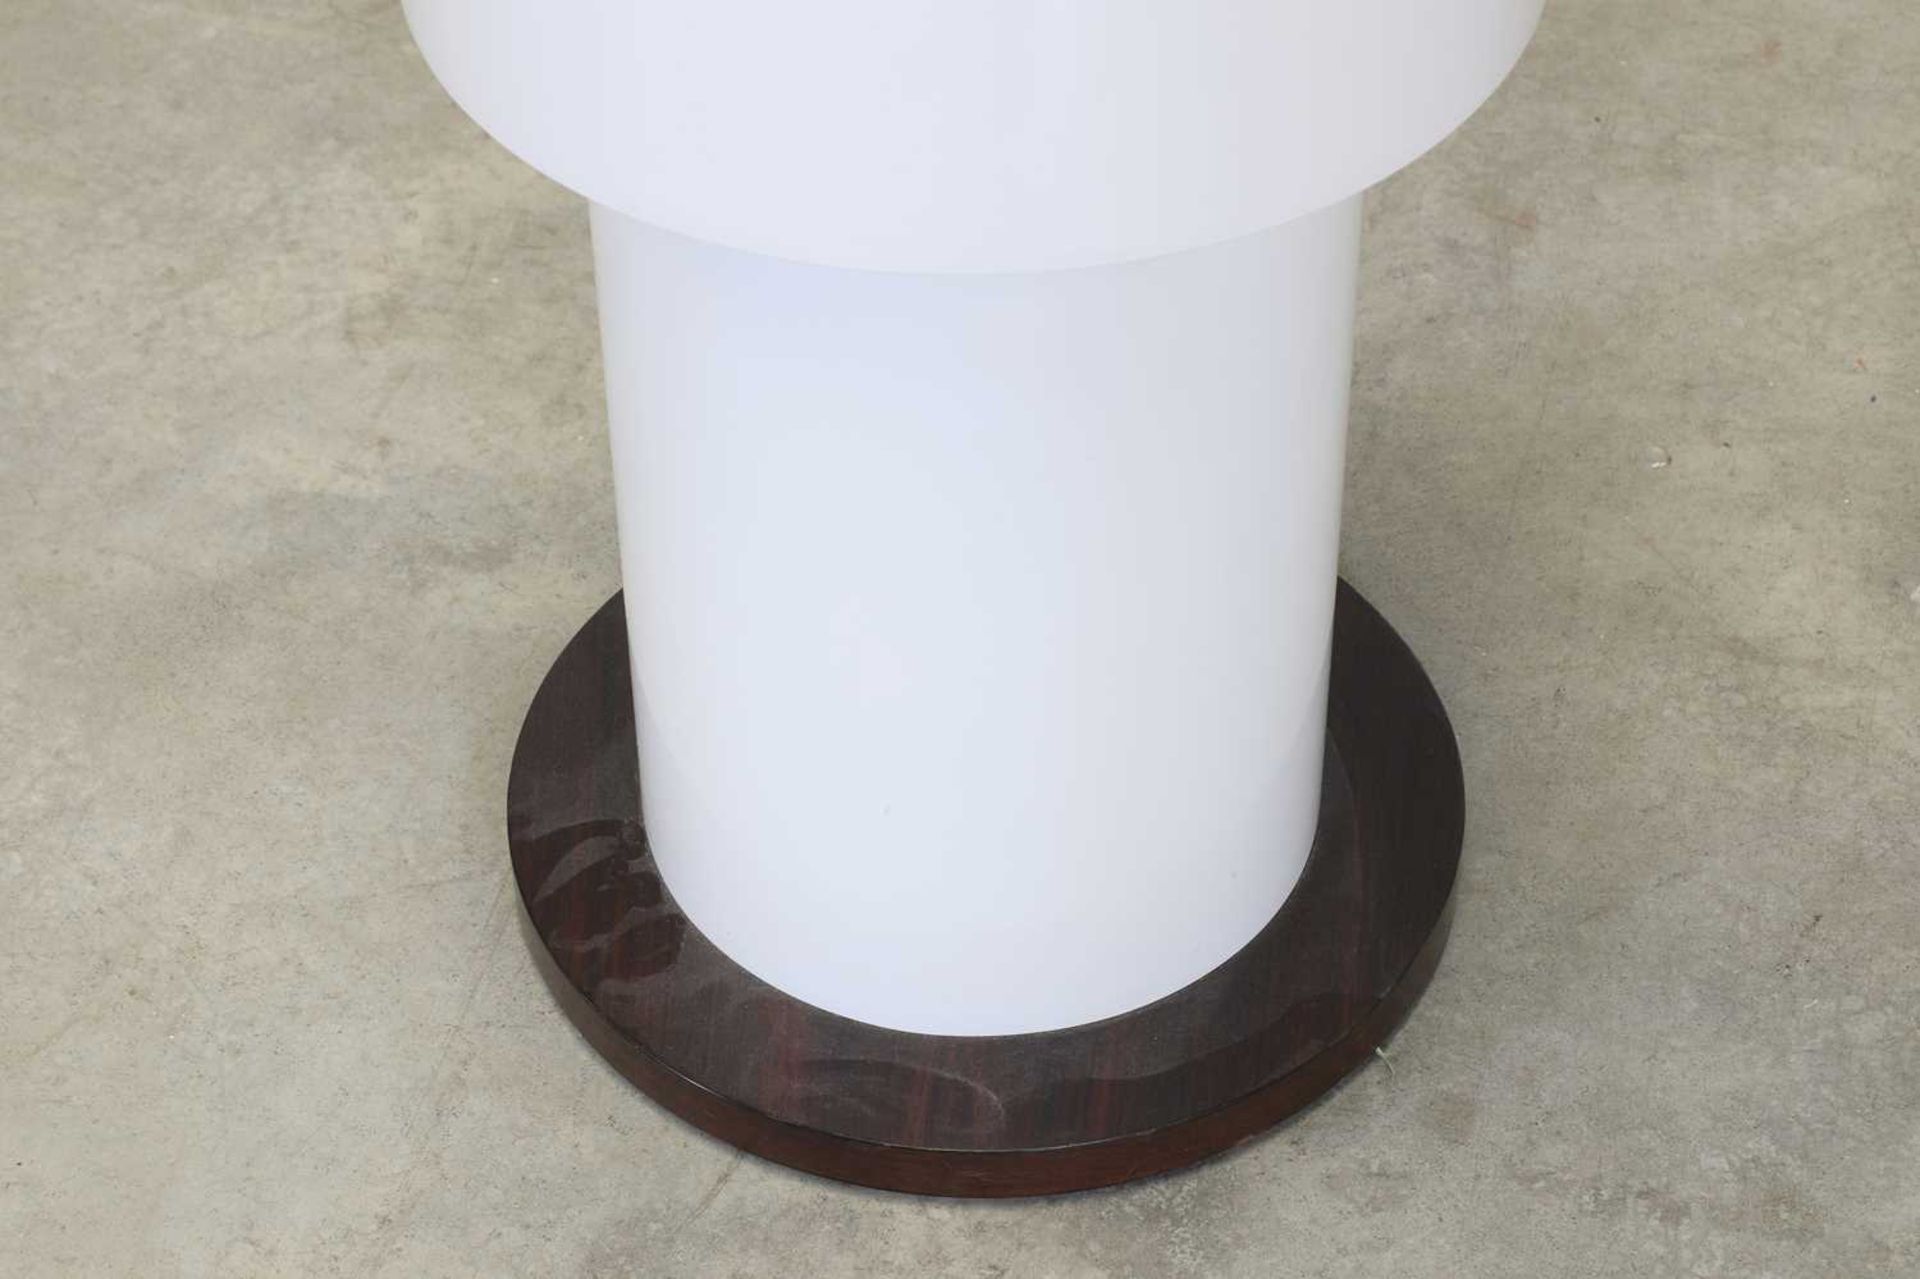 An Italian plastic stool, - Image 3 of 3